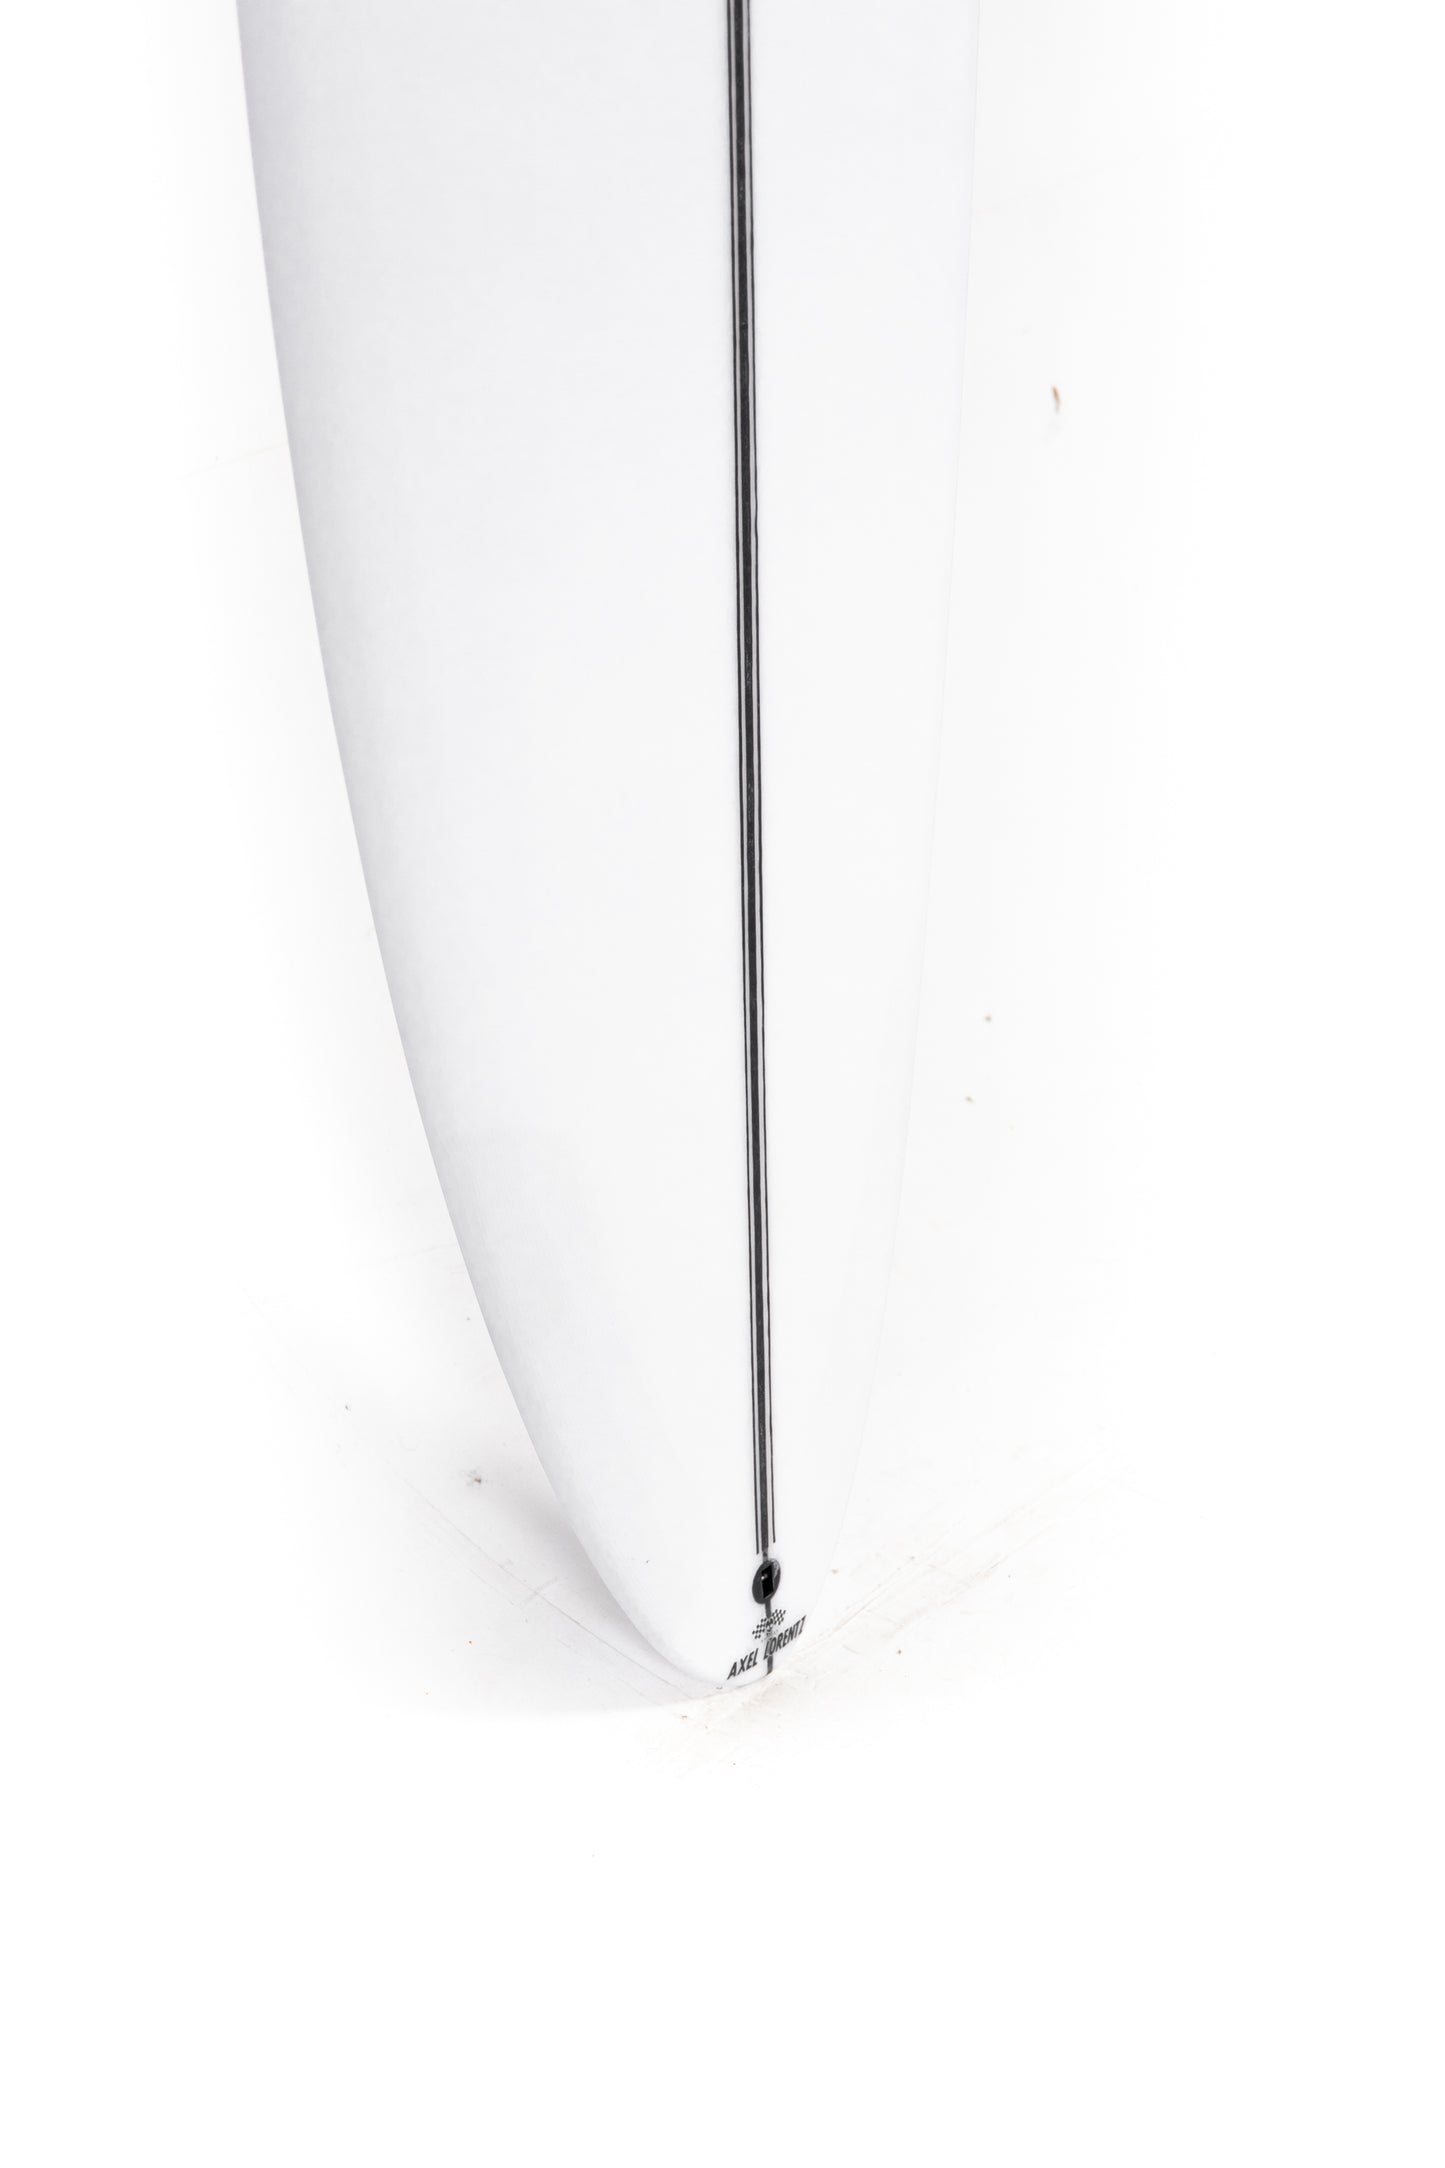 
                  
                    Pukas Surf Shop - Pukas Surfboard - 69ER EVOLUTION by Axel Lorentz- 6’6” x 21.25 x 2.88 - 42,21L - AX10799
                  
                